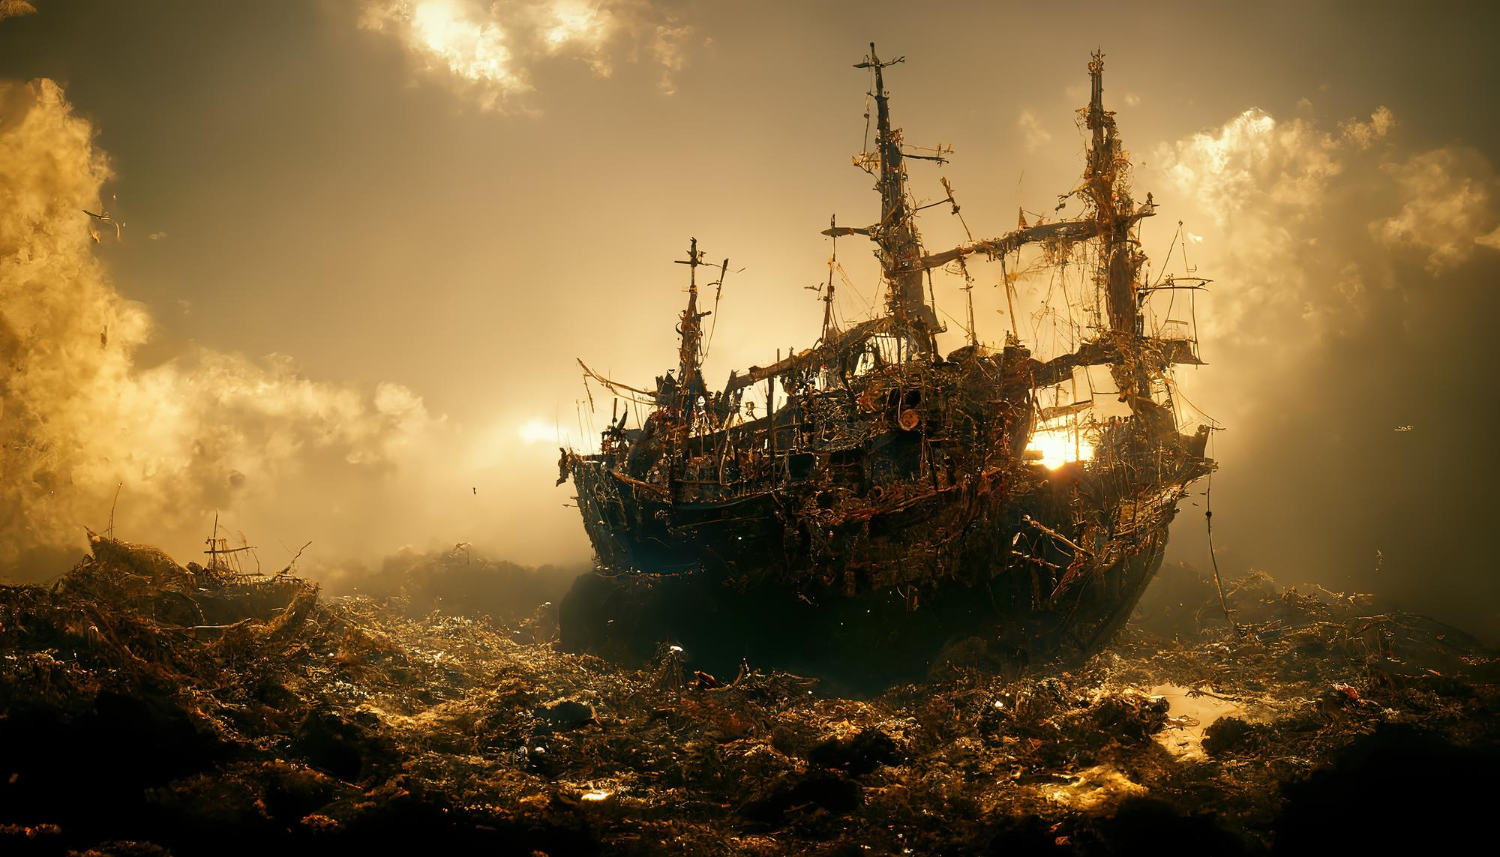 old wrecked ships rest junkyard beneath sky